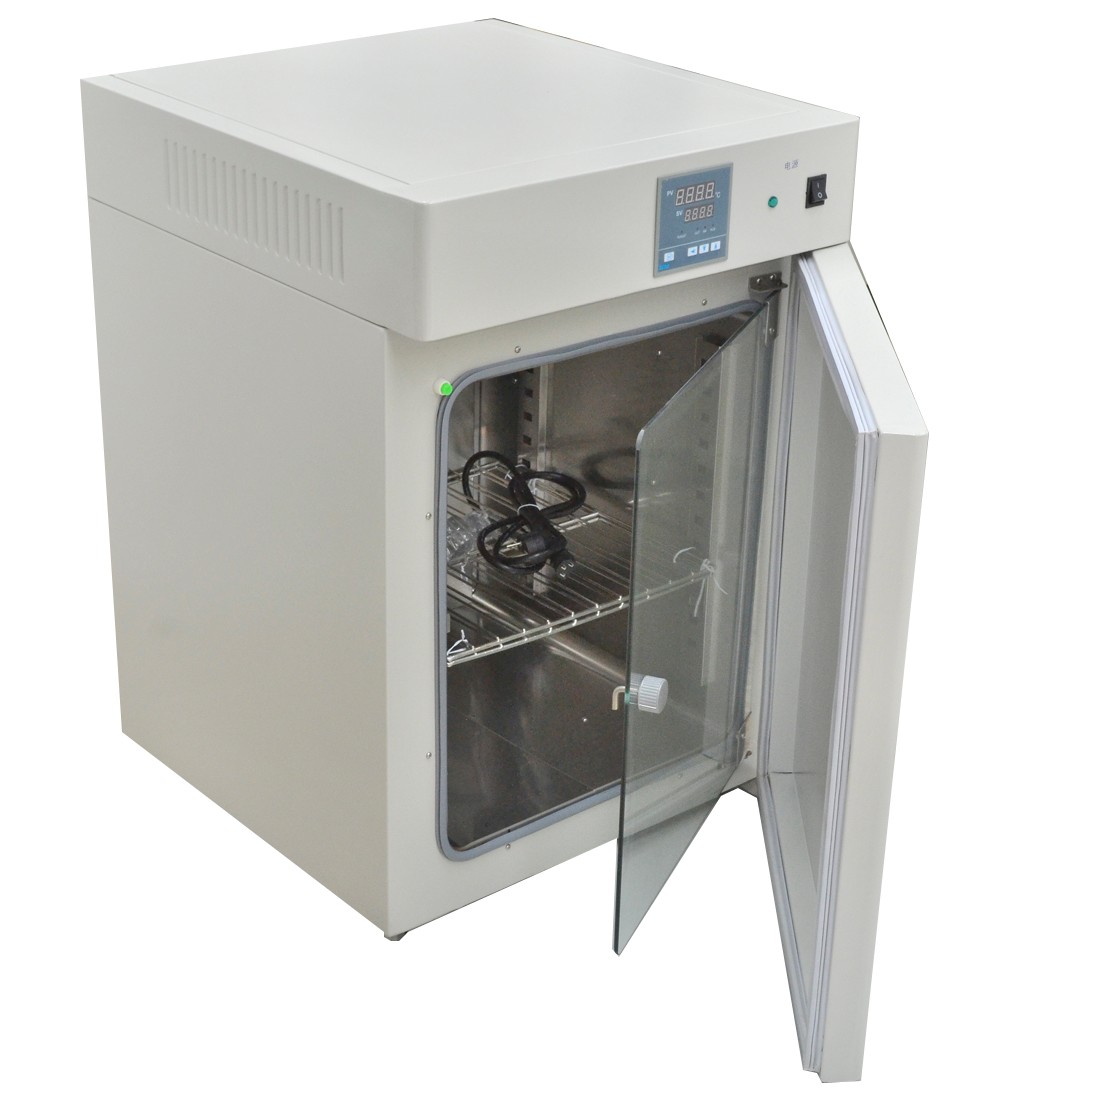 DHP-9082 电热恒温培养箱